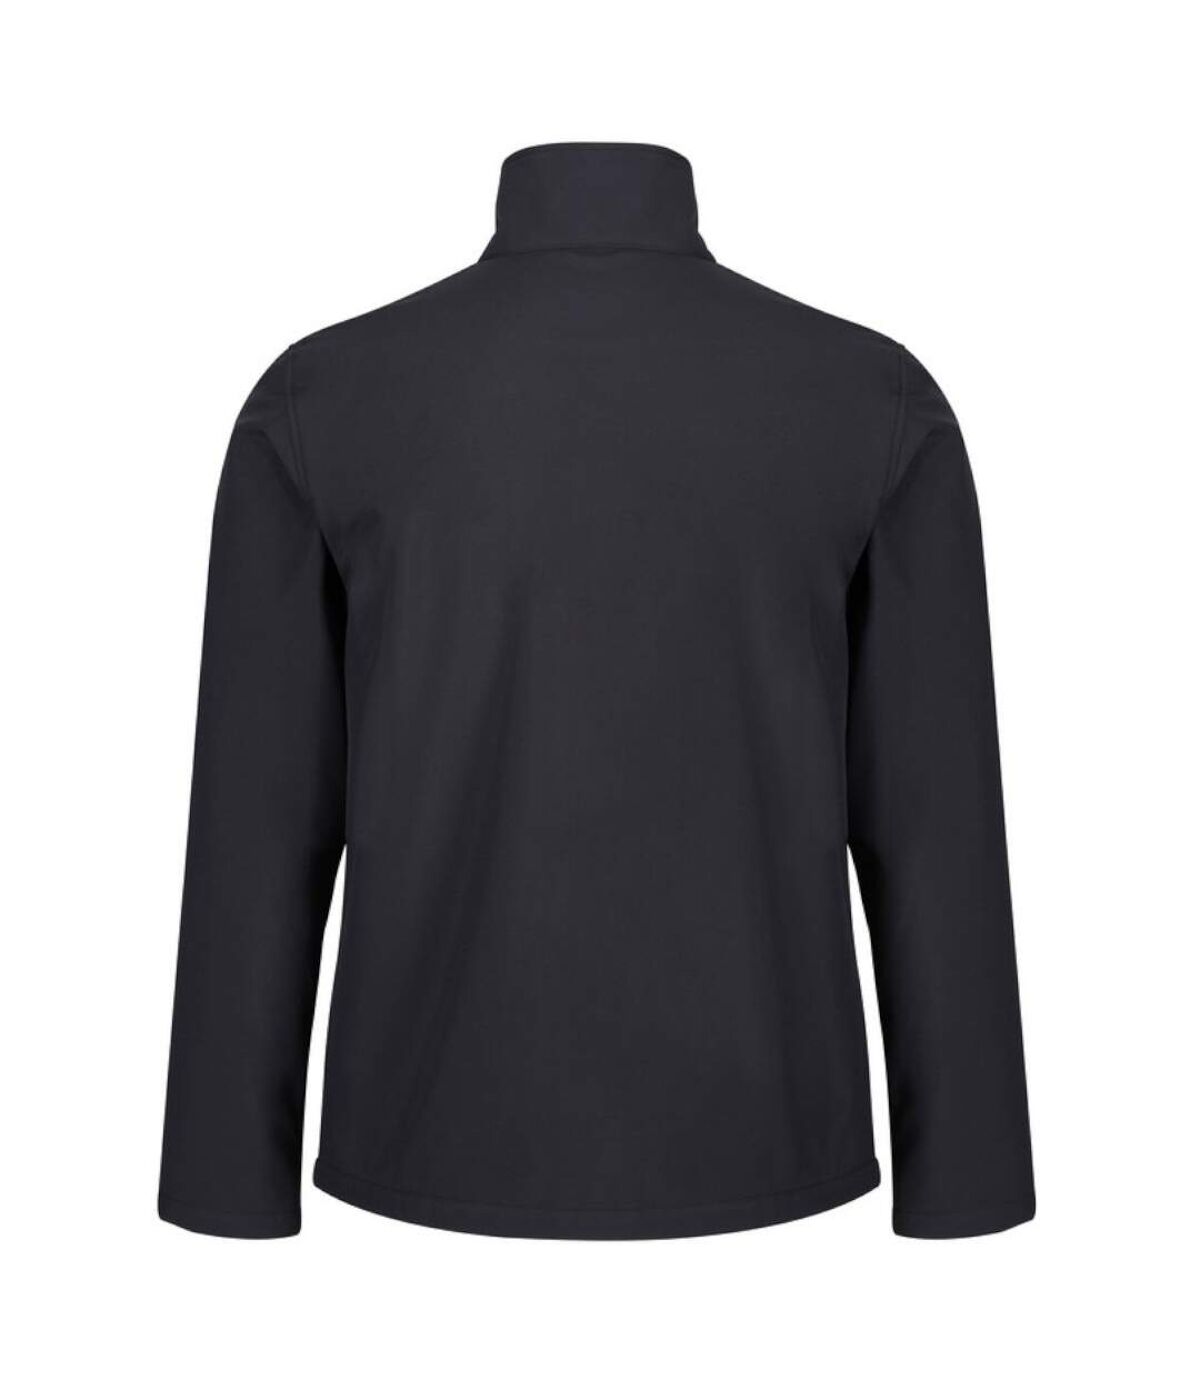 Regatta Professional Mens Ablaze Three Layer Soft Shell Jacket (Seal Grey/Black) - UTPC4061